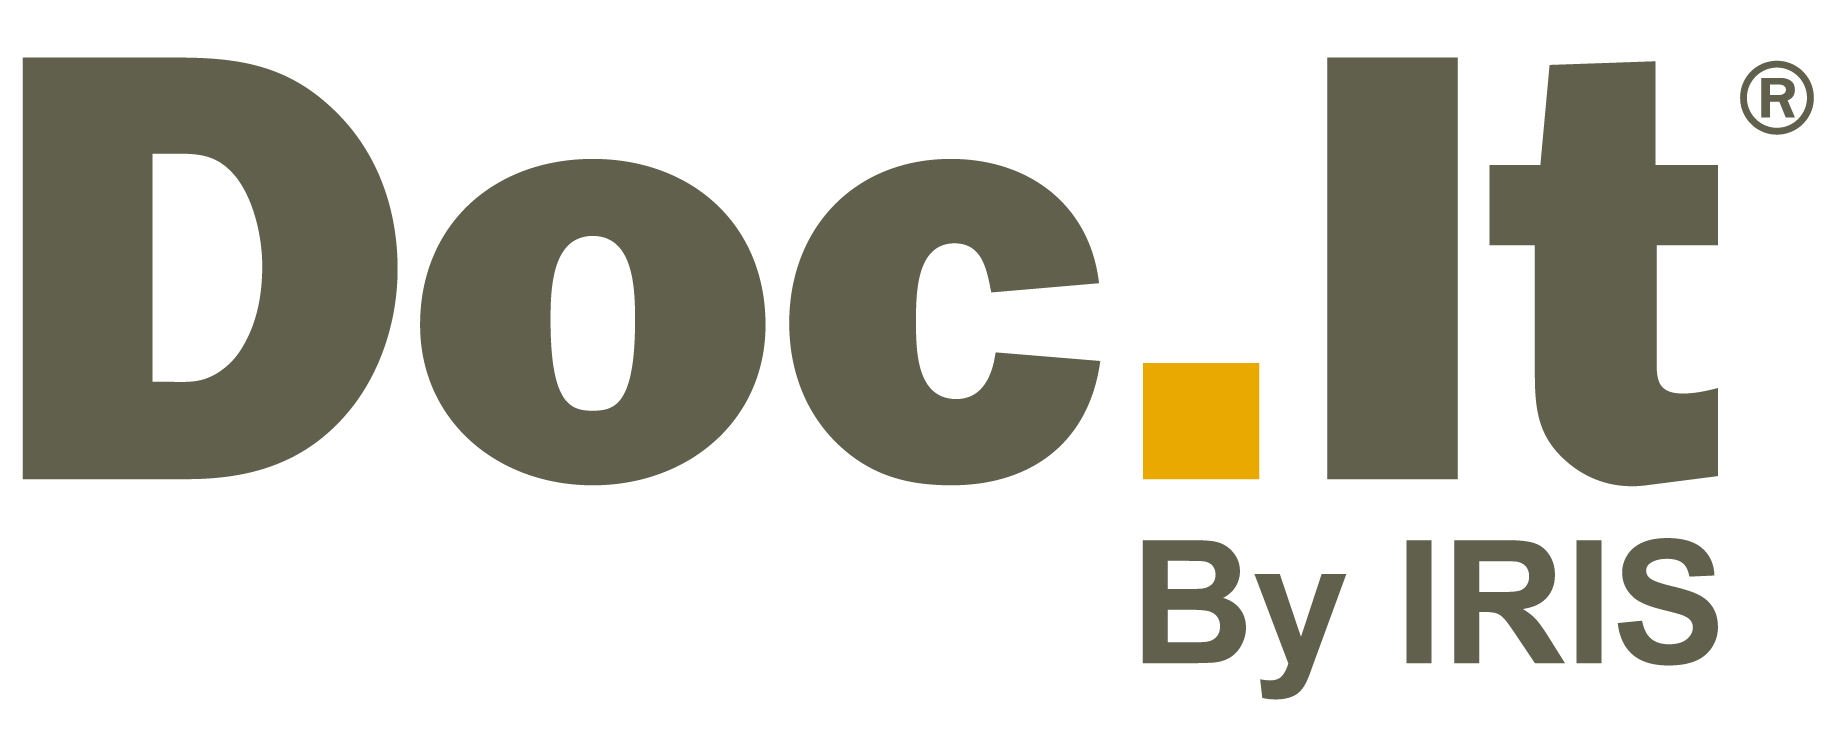 Doc.It Logo